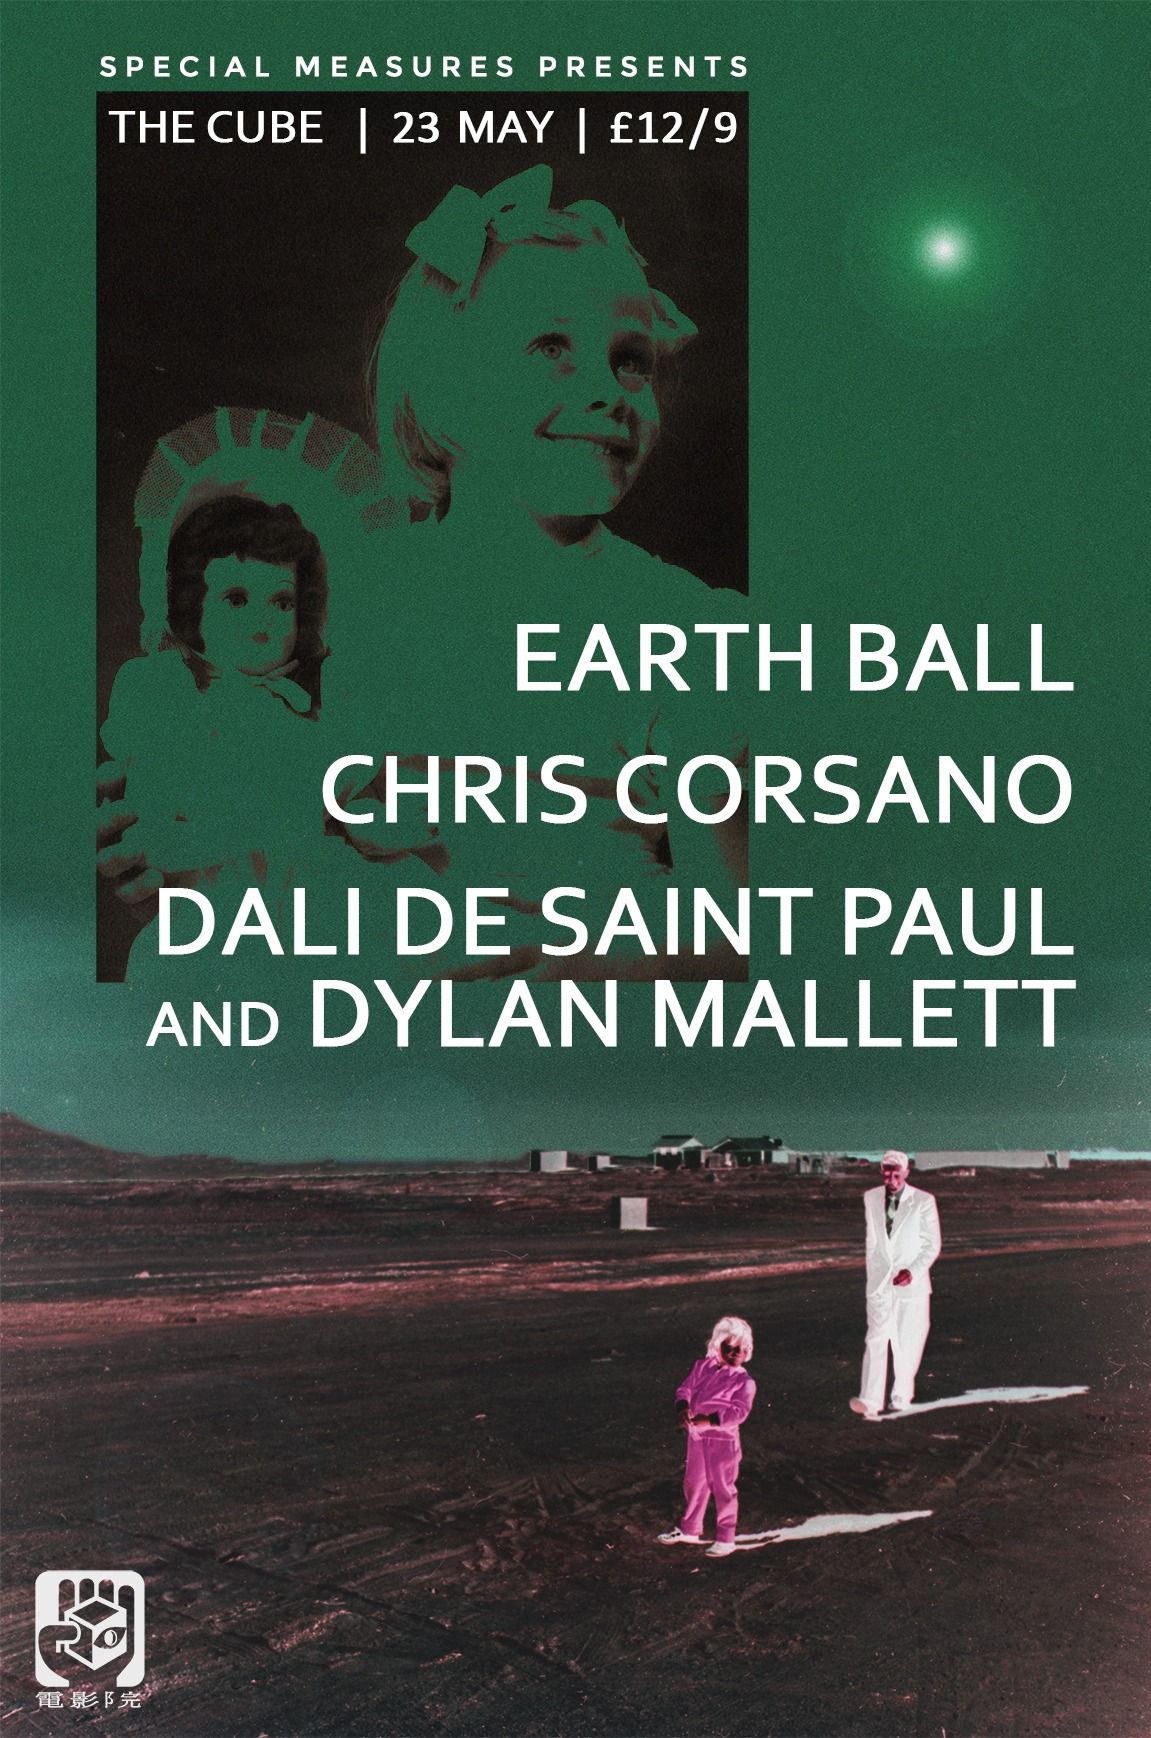 EARTH BALL, CHRIS CORSANO, DALI DE SAINT PAUL + DYLAN MALLETT